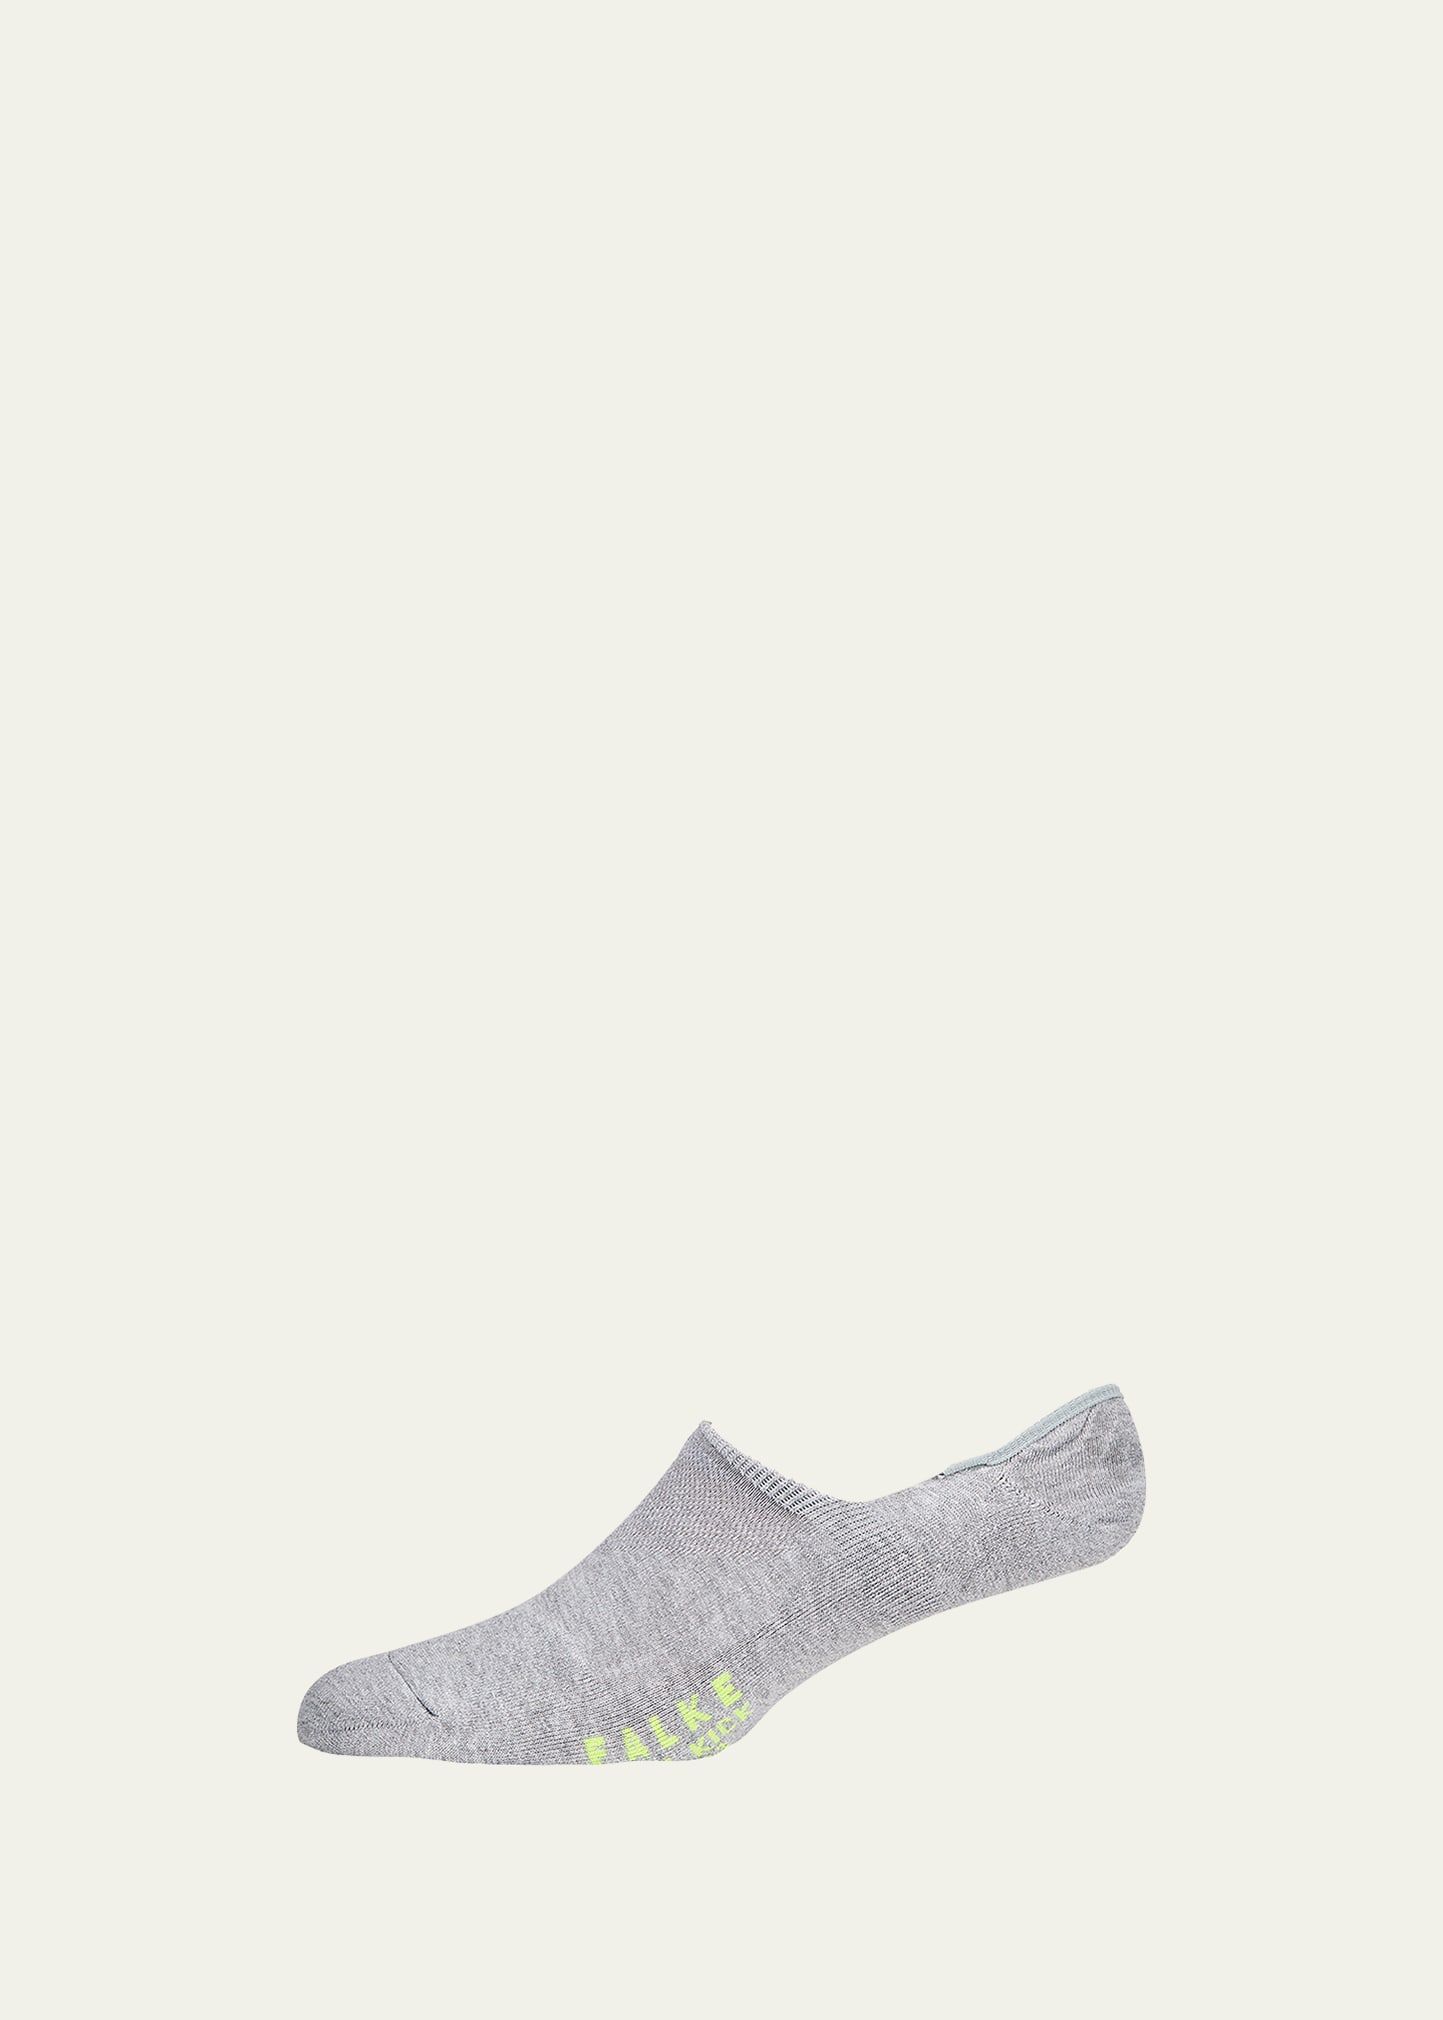 Falke Men's Cool Kick No-show Socks In Gray